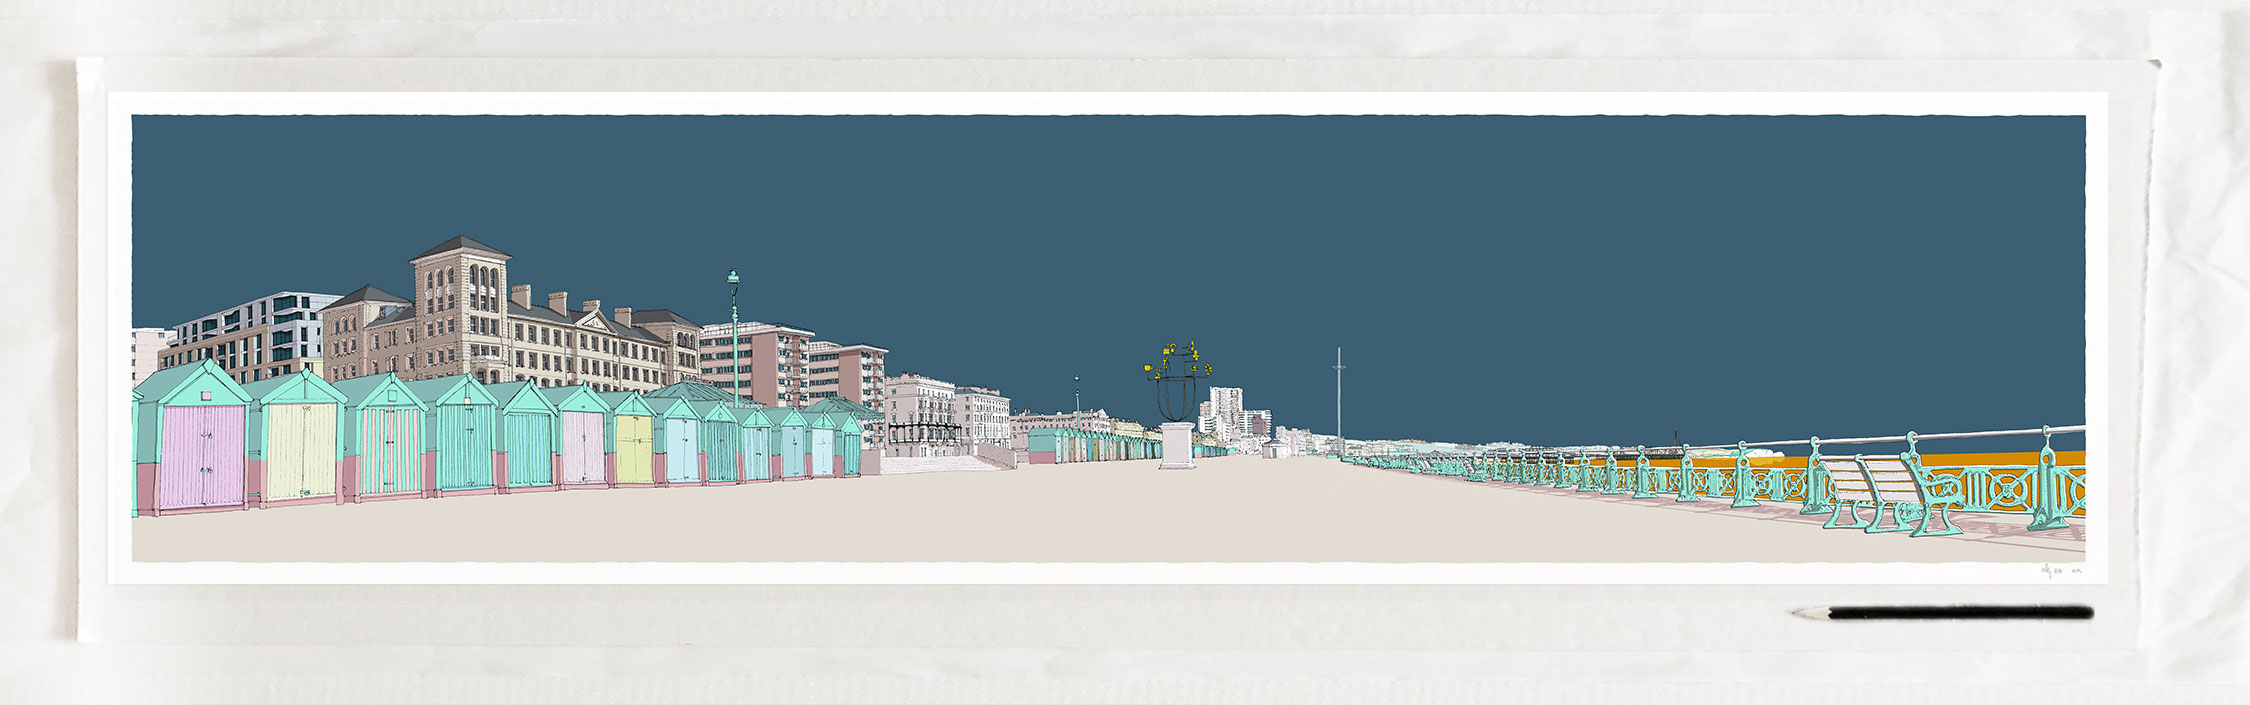 art print titled Brighton Beach Huts by Hove Plinth and Kings Road by artist alej ez